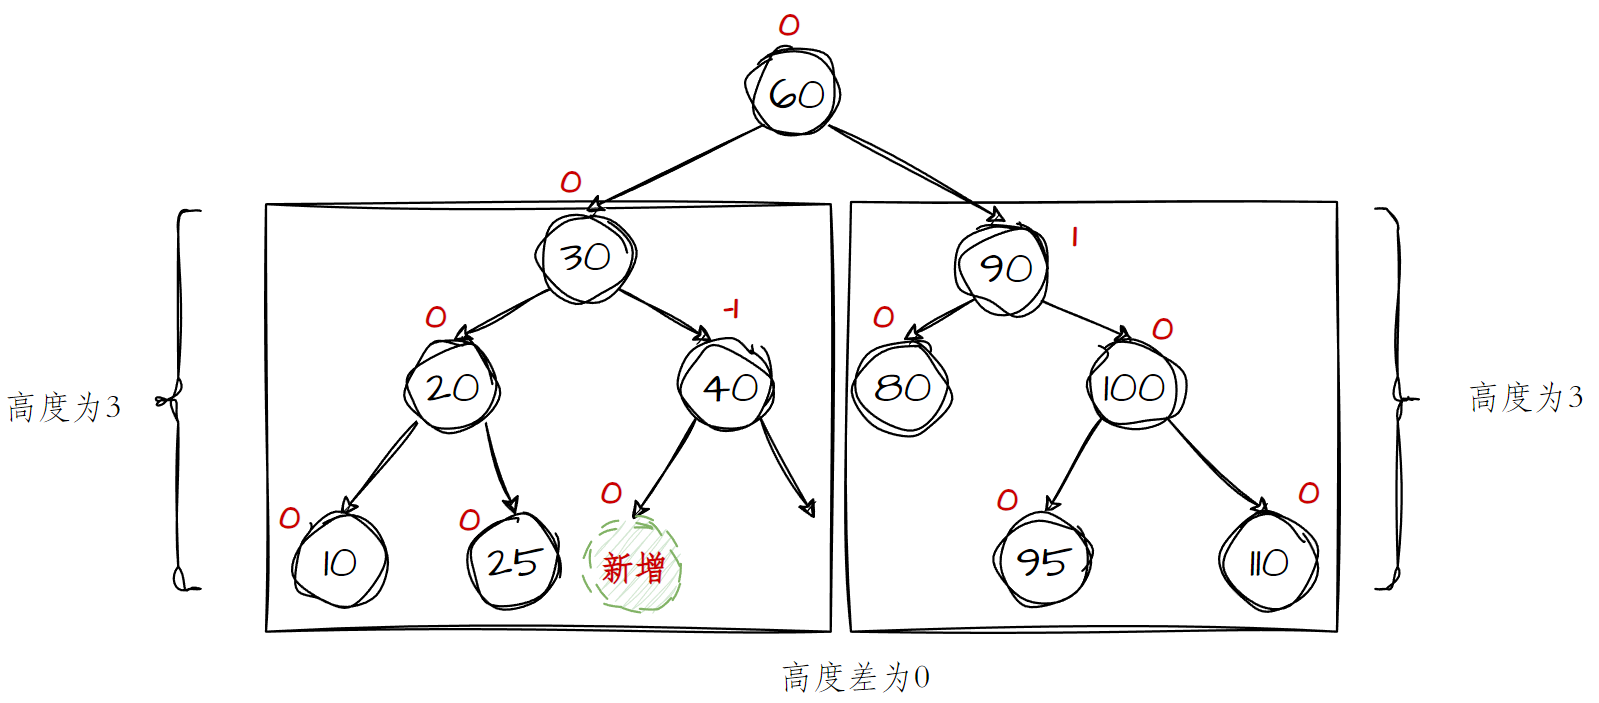 AVL树示例图